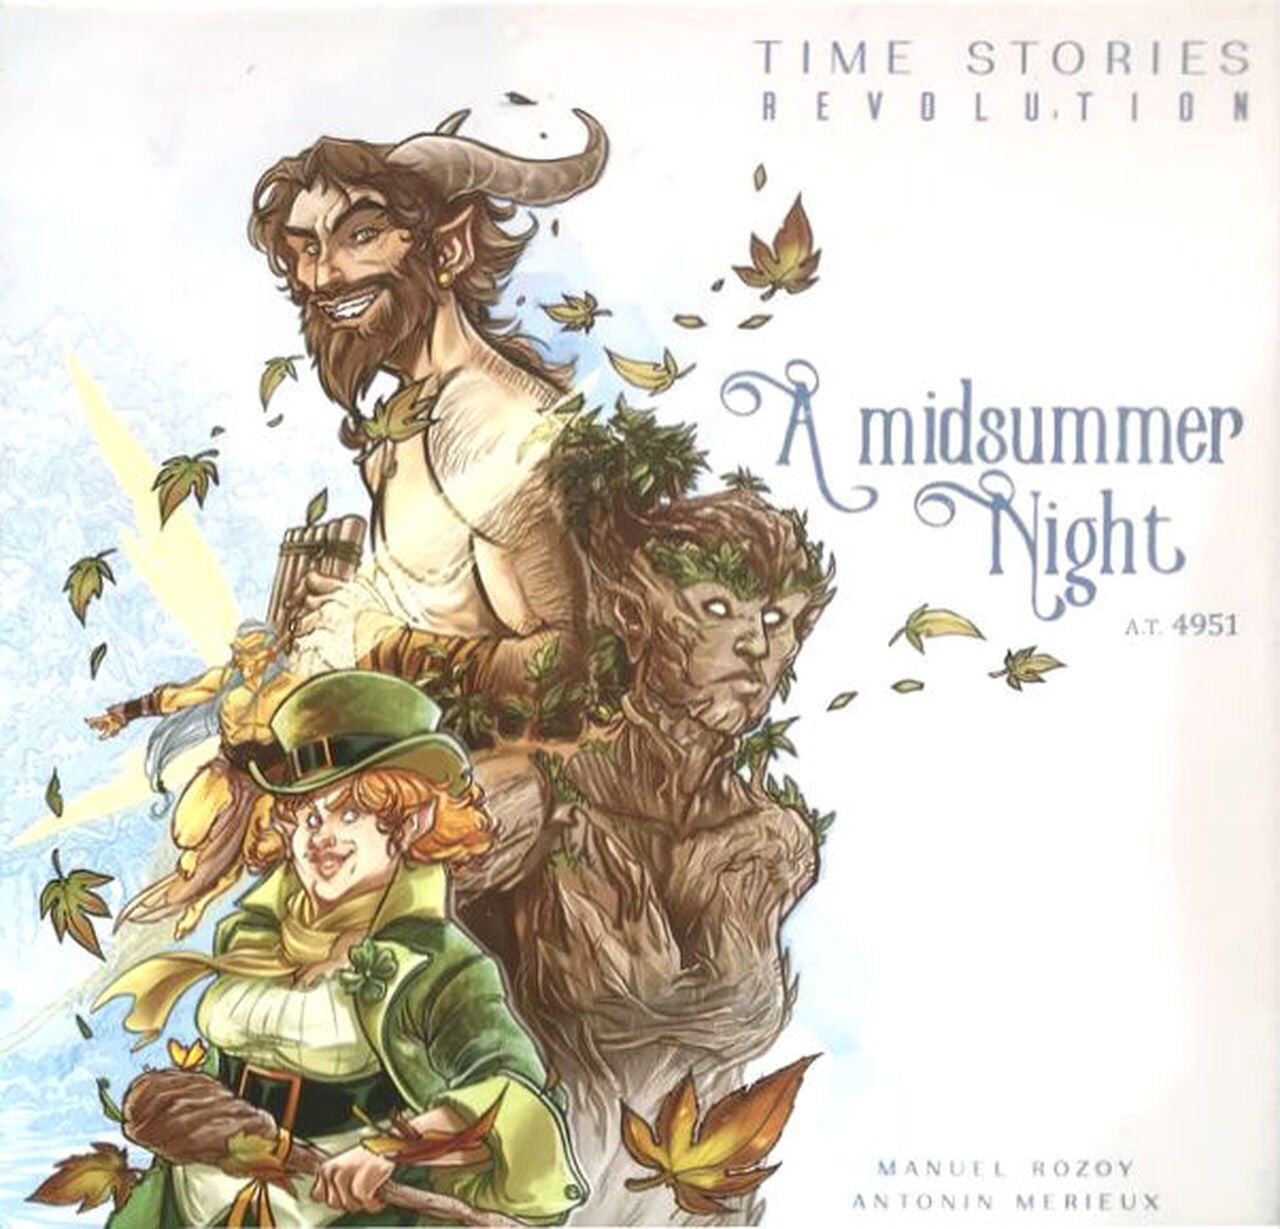 Time Stories Revolution - A Midsummer’s Night